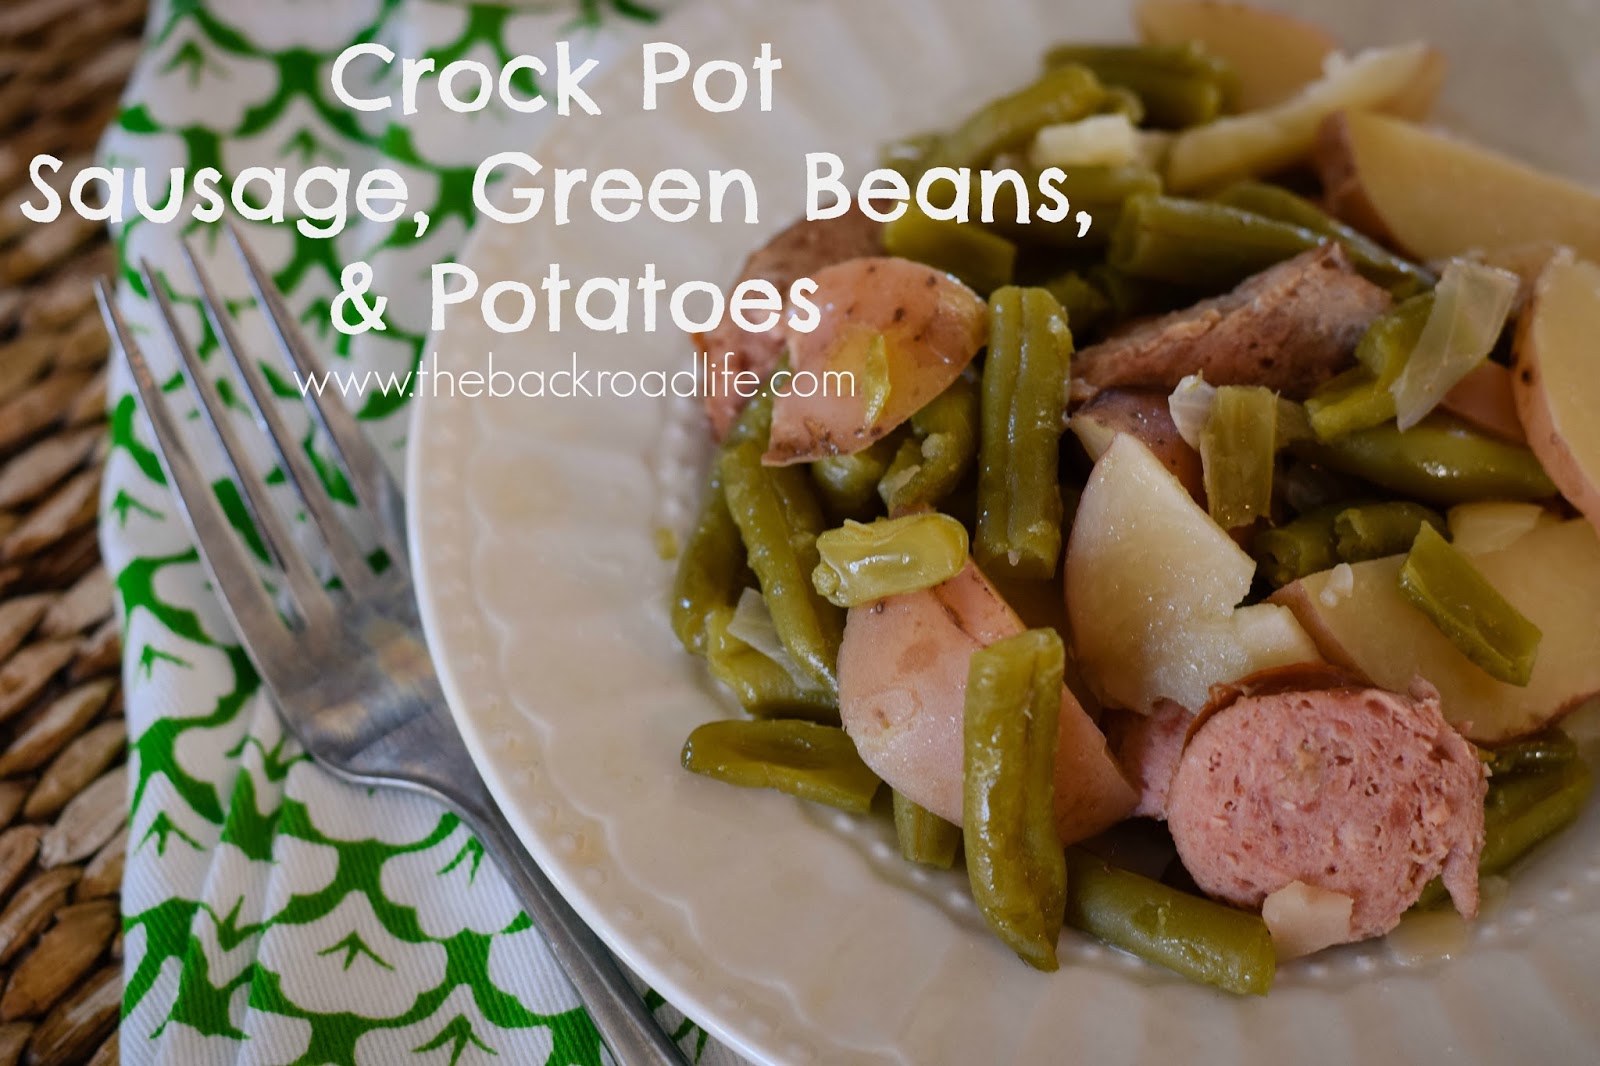 The Backroad Life: Crock Pot Sausage, Green Beans, and Potatoes